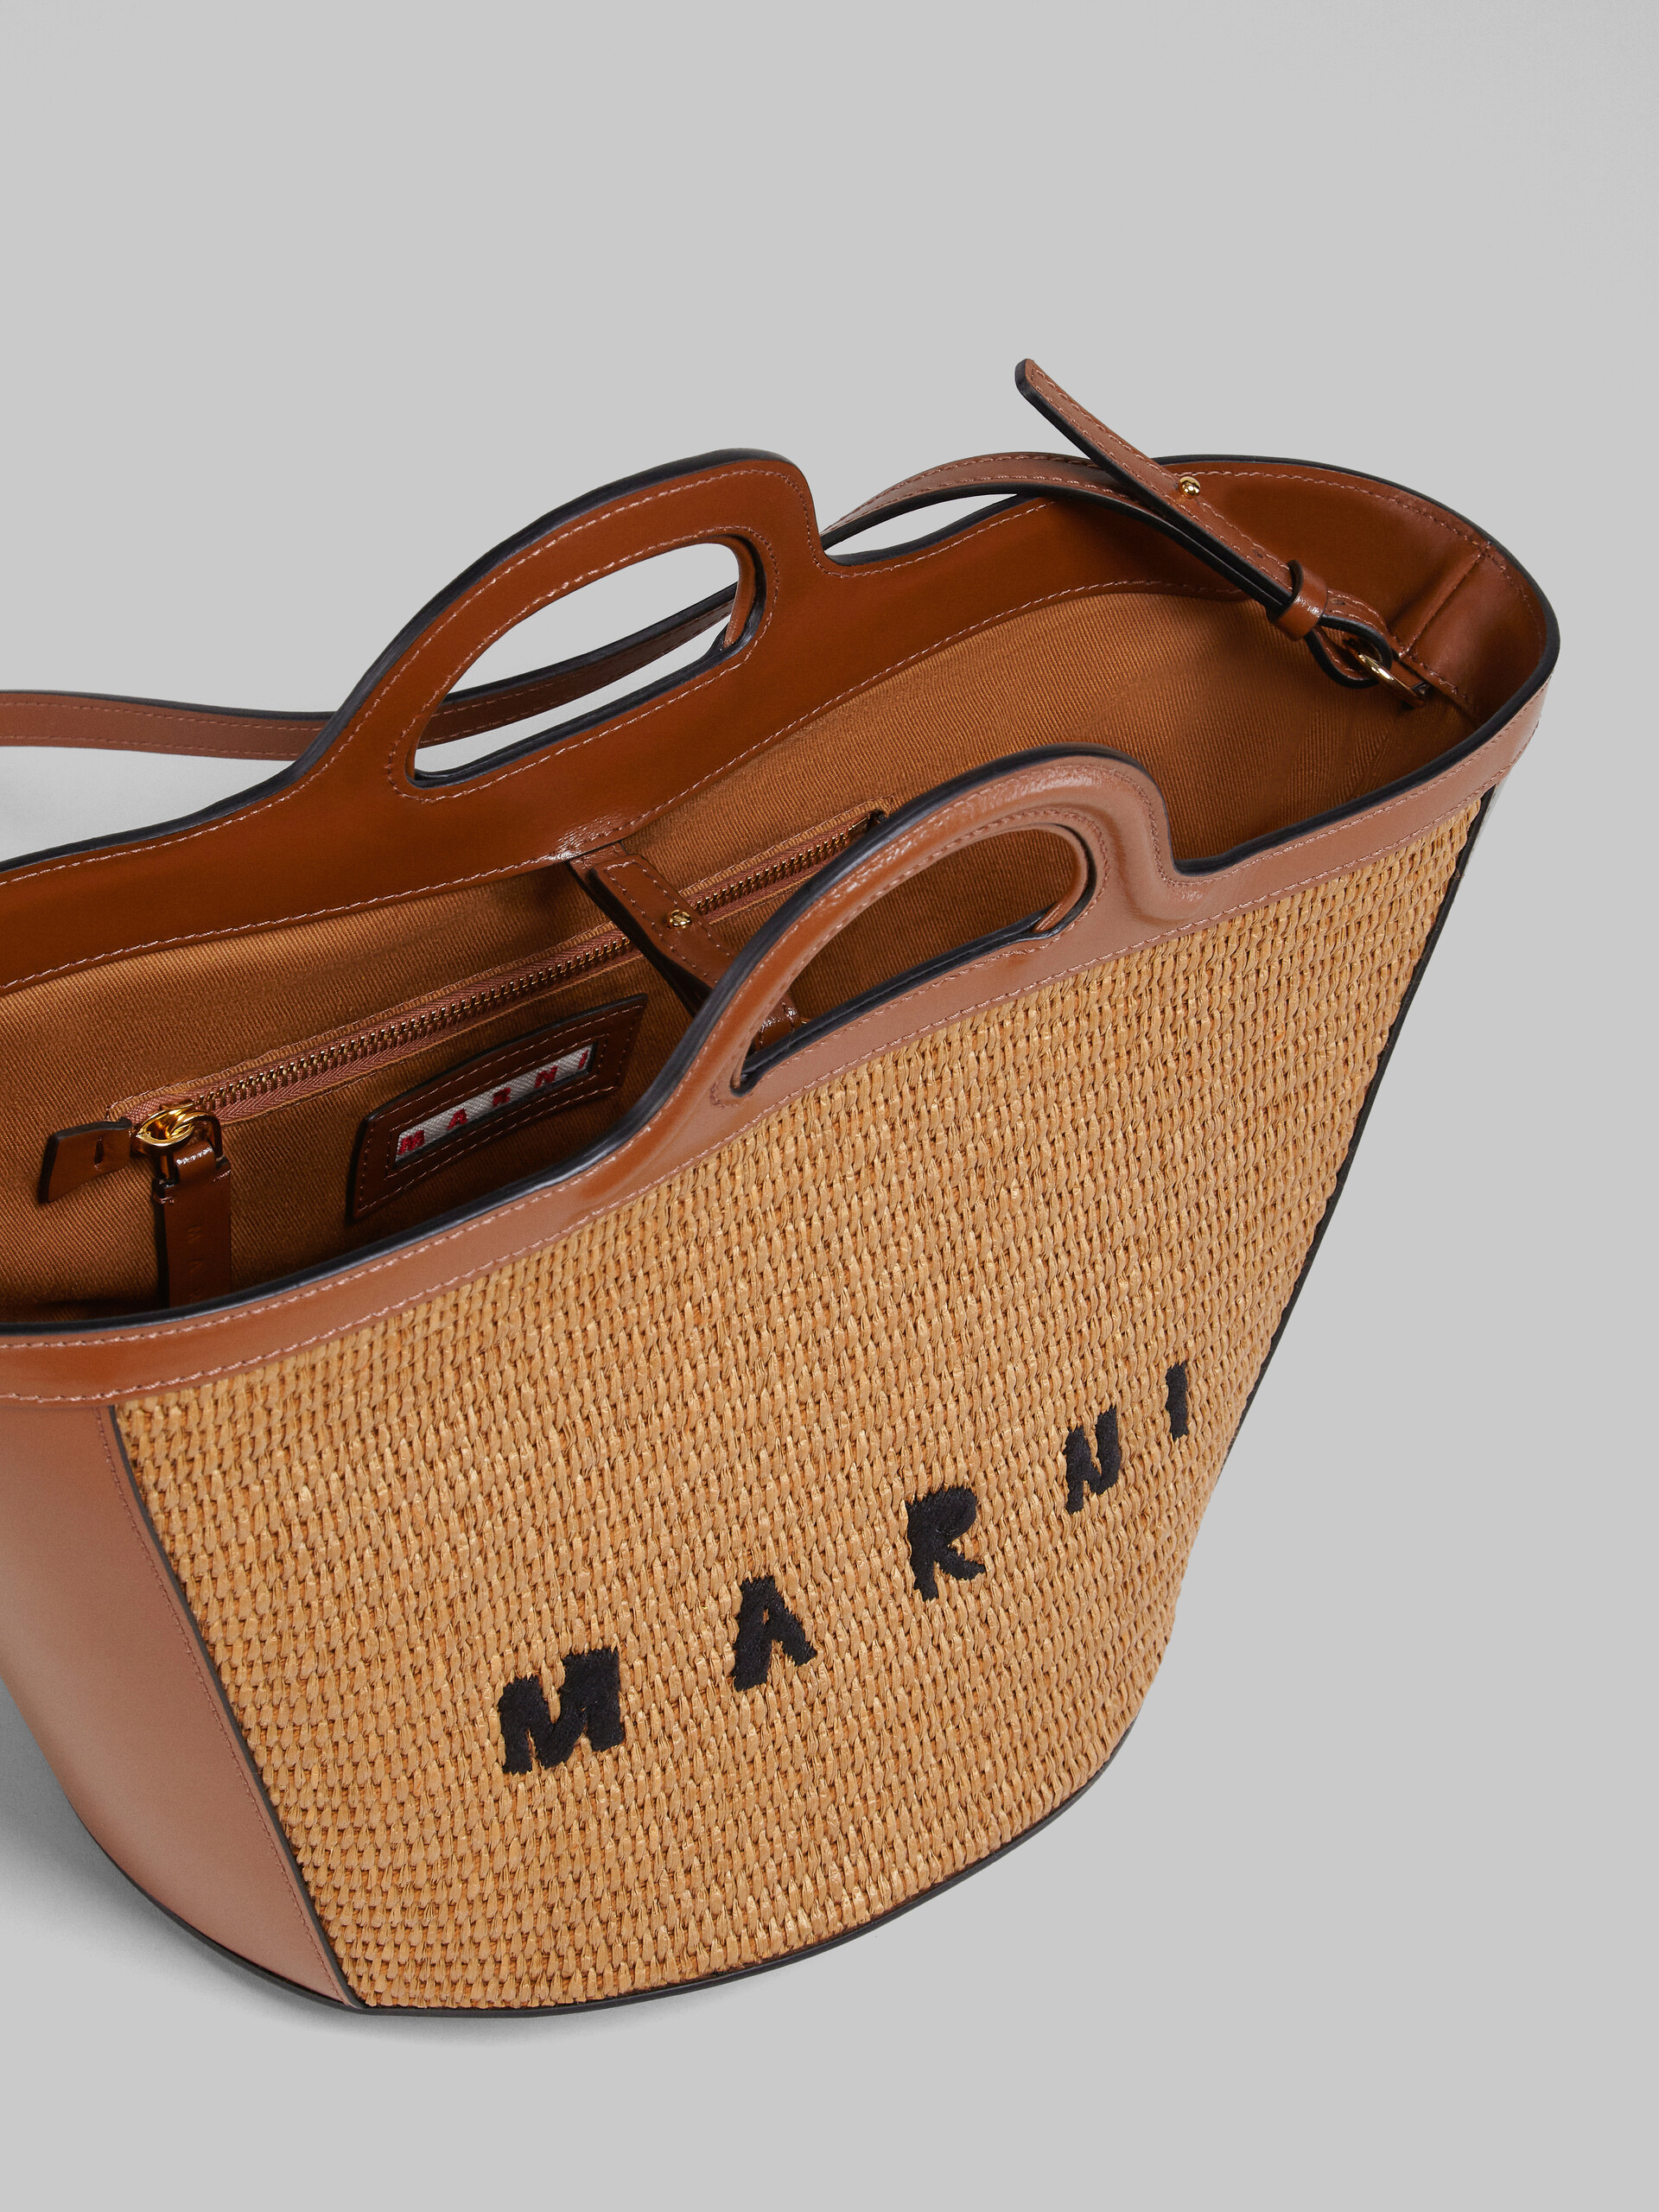 Tropicalia Small Bag in brown leather and raffia-effect fabric - Handbag - Image 5